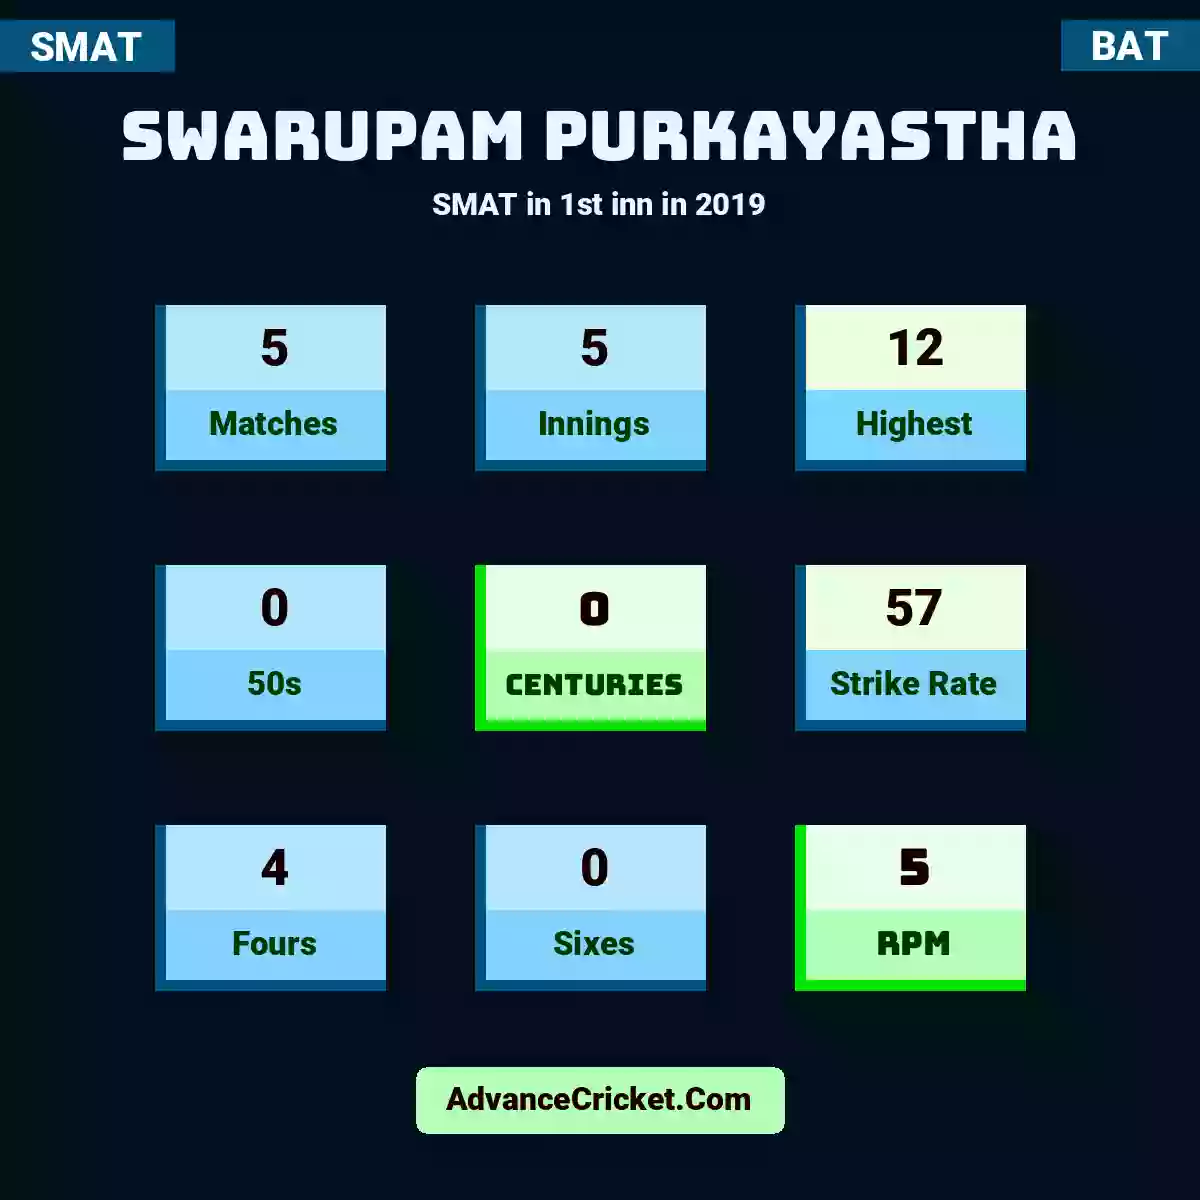 Swarupam Purkayastha SMAT  in 1st inn in 2019, Swarupam Purkayastha played 5 matches, scored 12 runs as highest, 0 half-centuries, and 0 centuries, with a strike rate of 57. S.Purkayastha hit 4 fours and 0 sixes, with an RPM of 5.